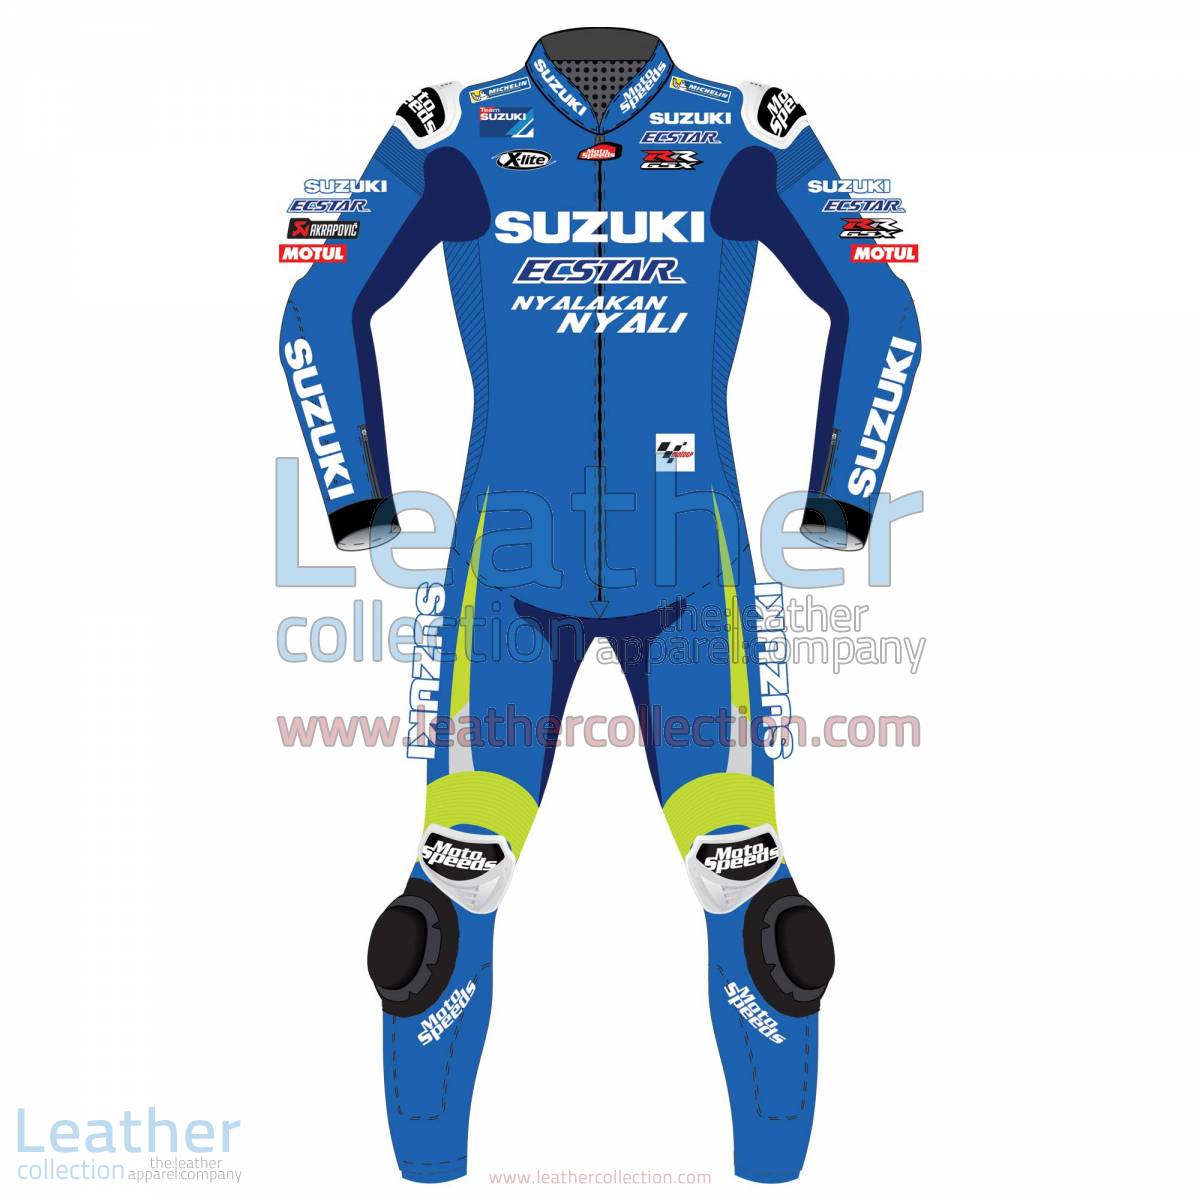 Alex Rins Suzuki MotoGP 2017 Racing Suit